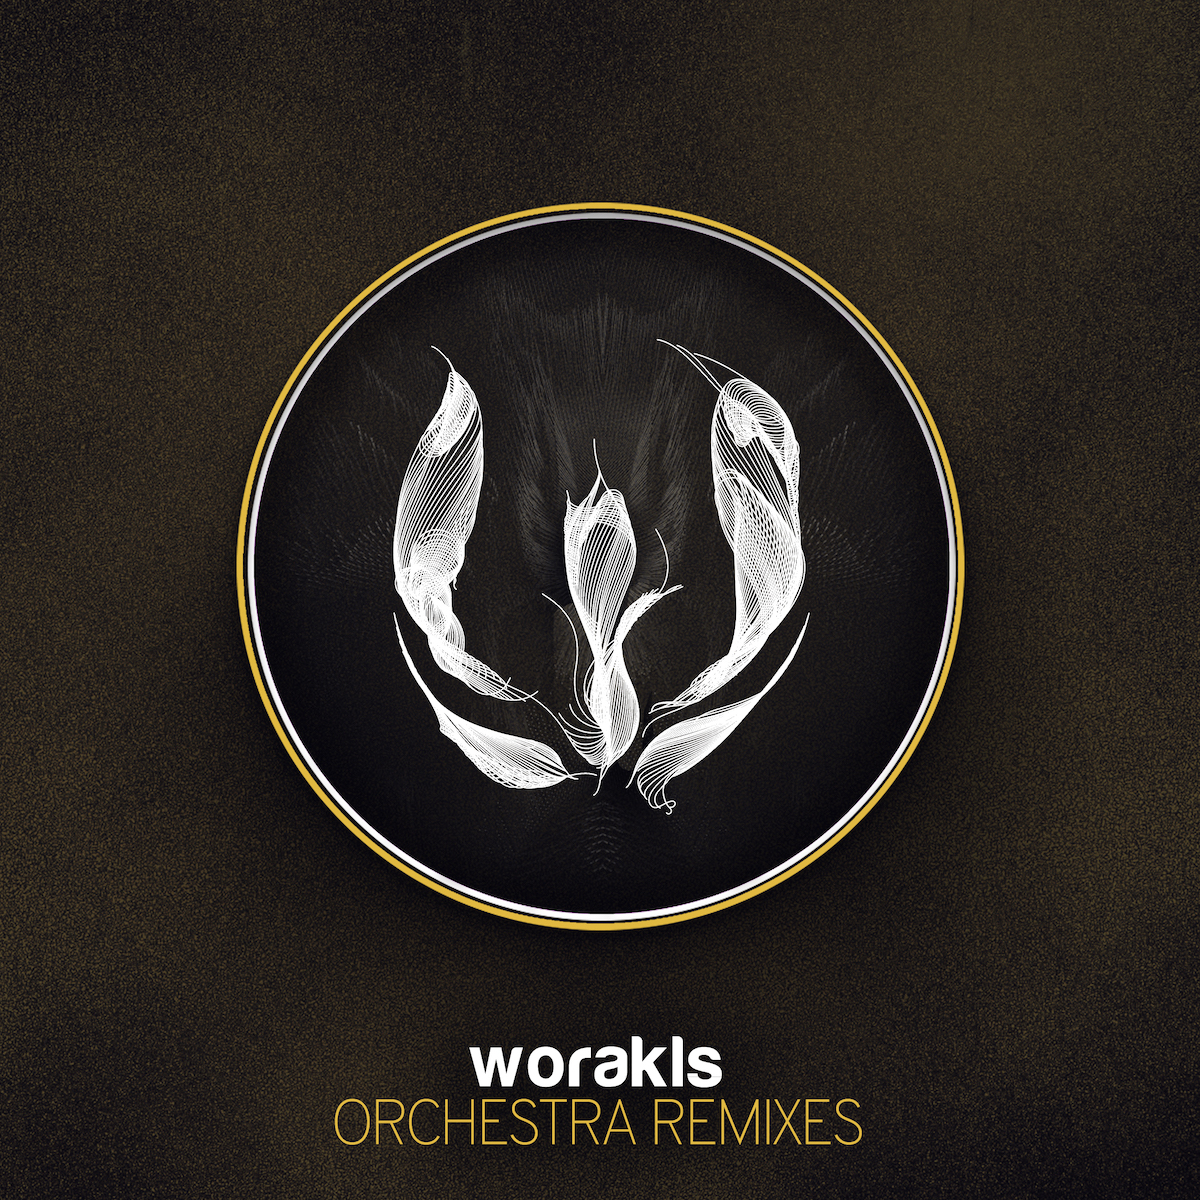 Worakls Orchestra remix cover